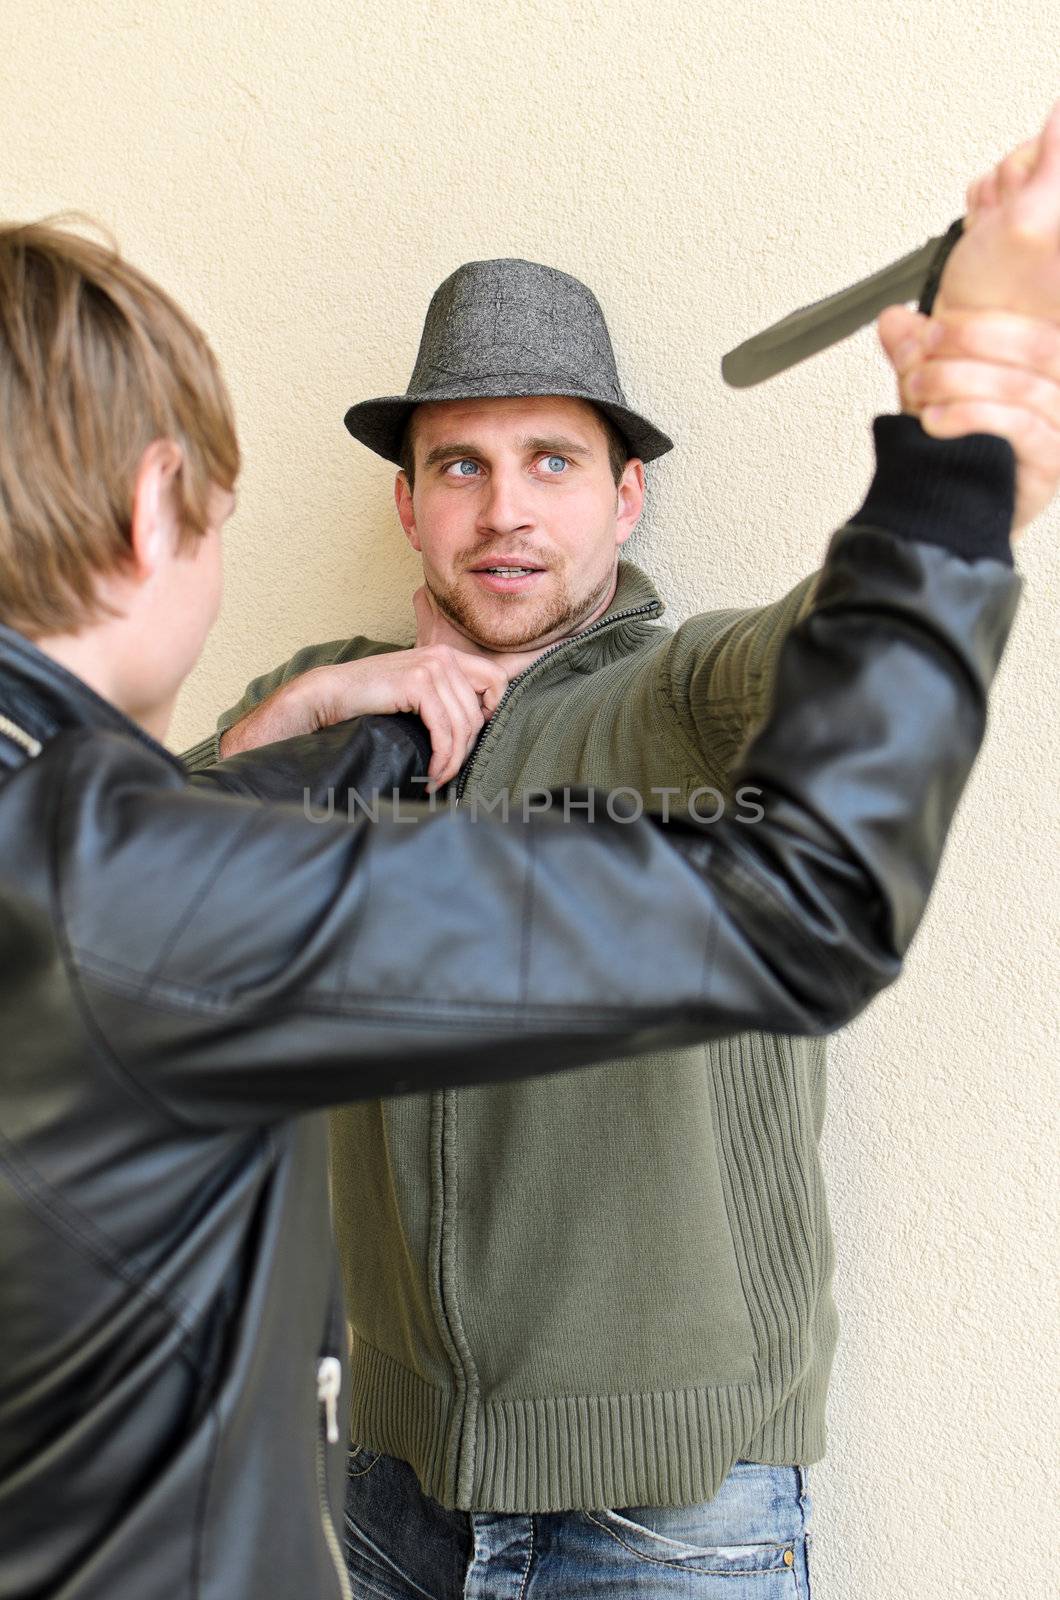 Burglar is trying to kill man by knife.